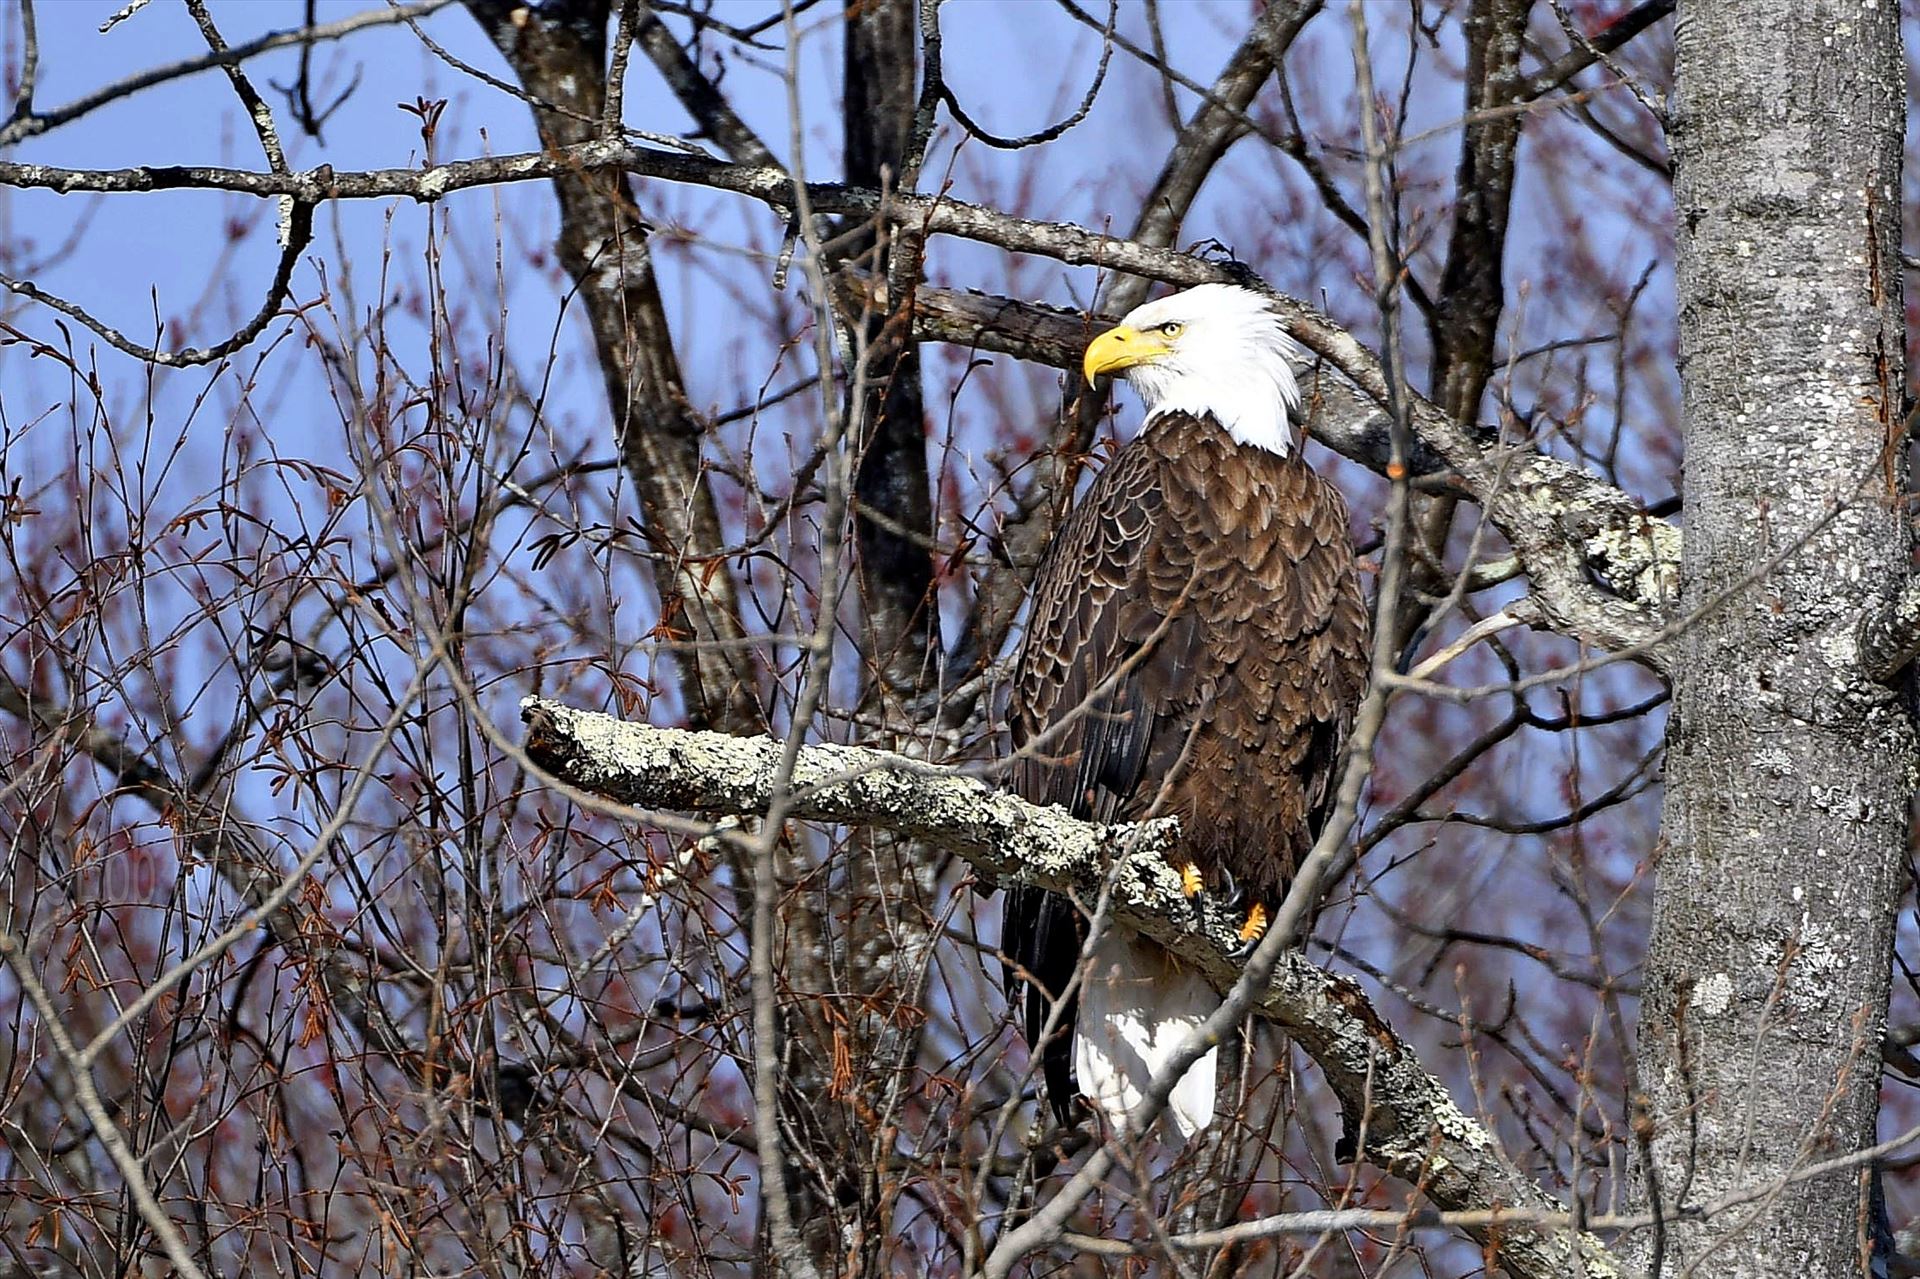 Eagle_4071 - Bald Eagle, Barryville, Ny by Buckmaster